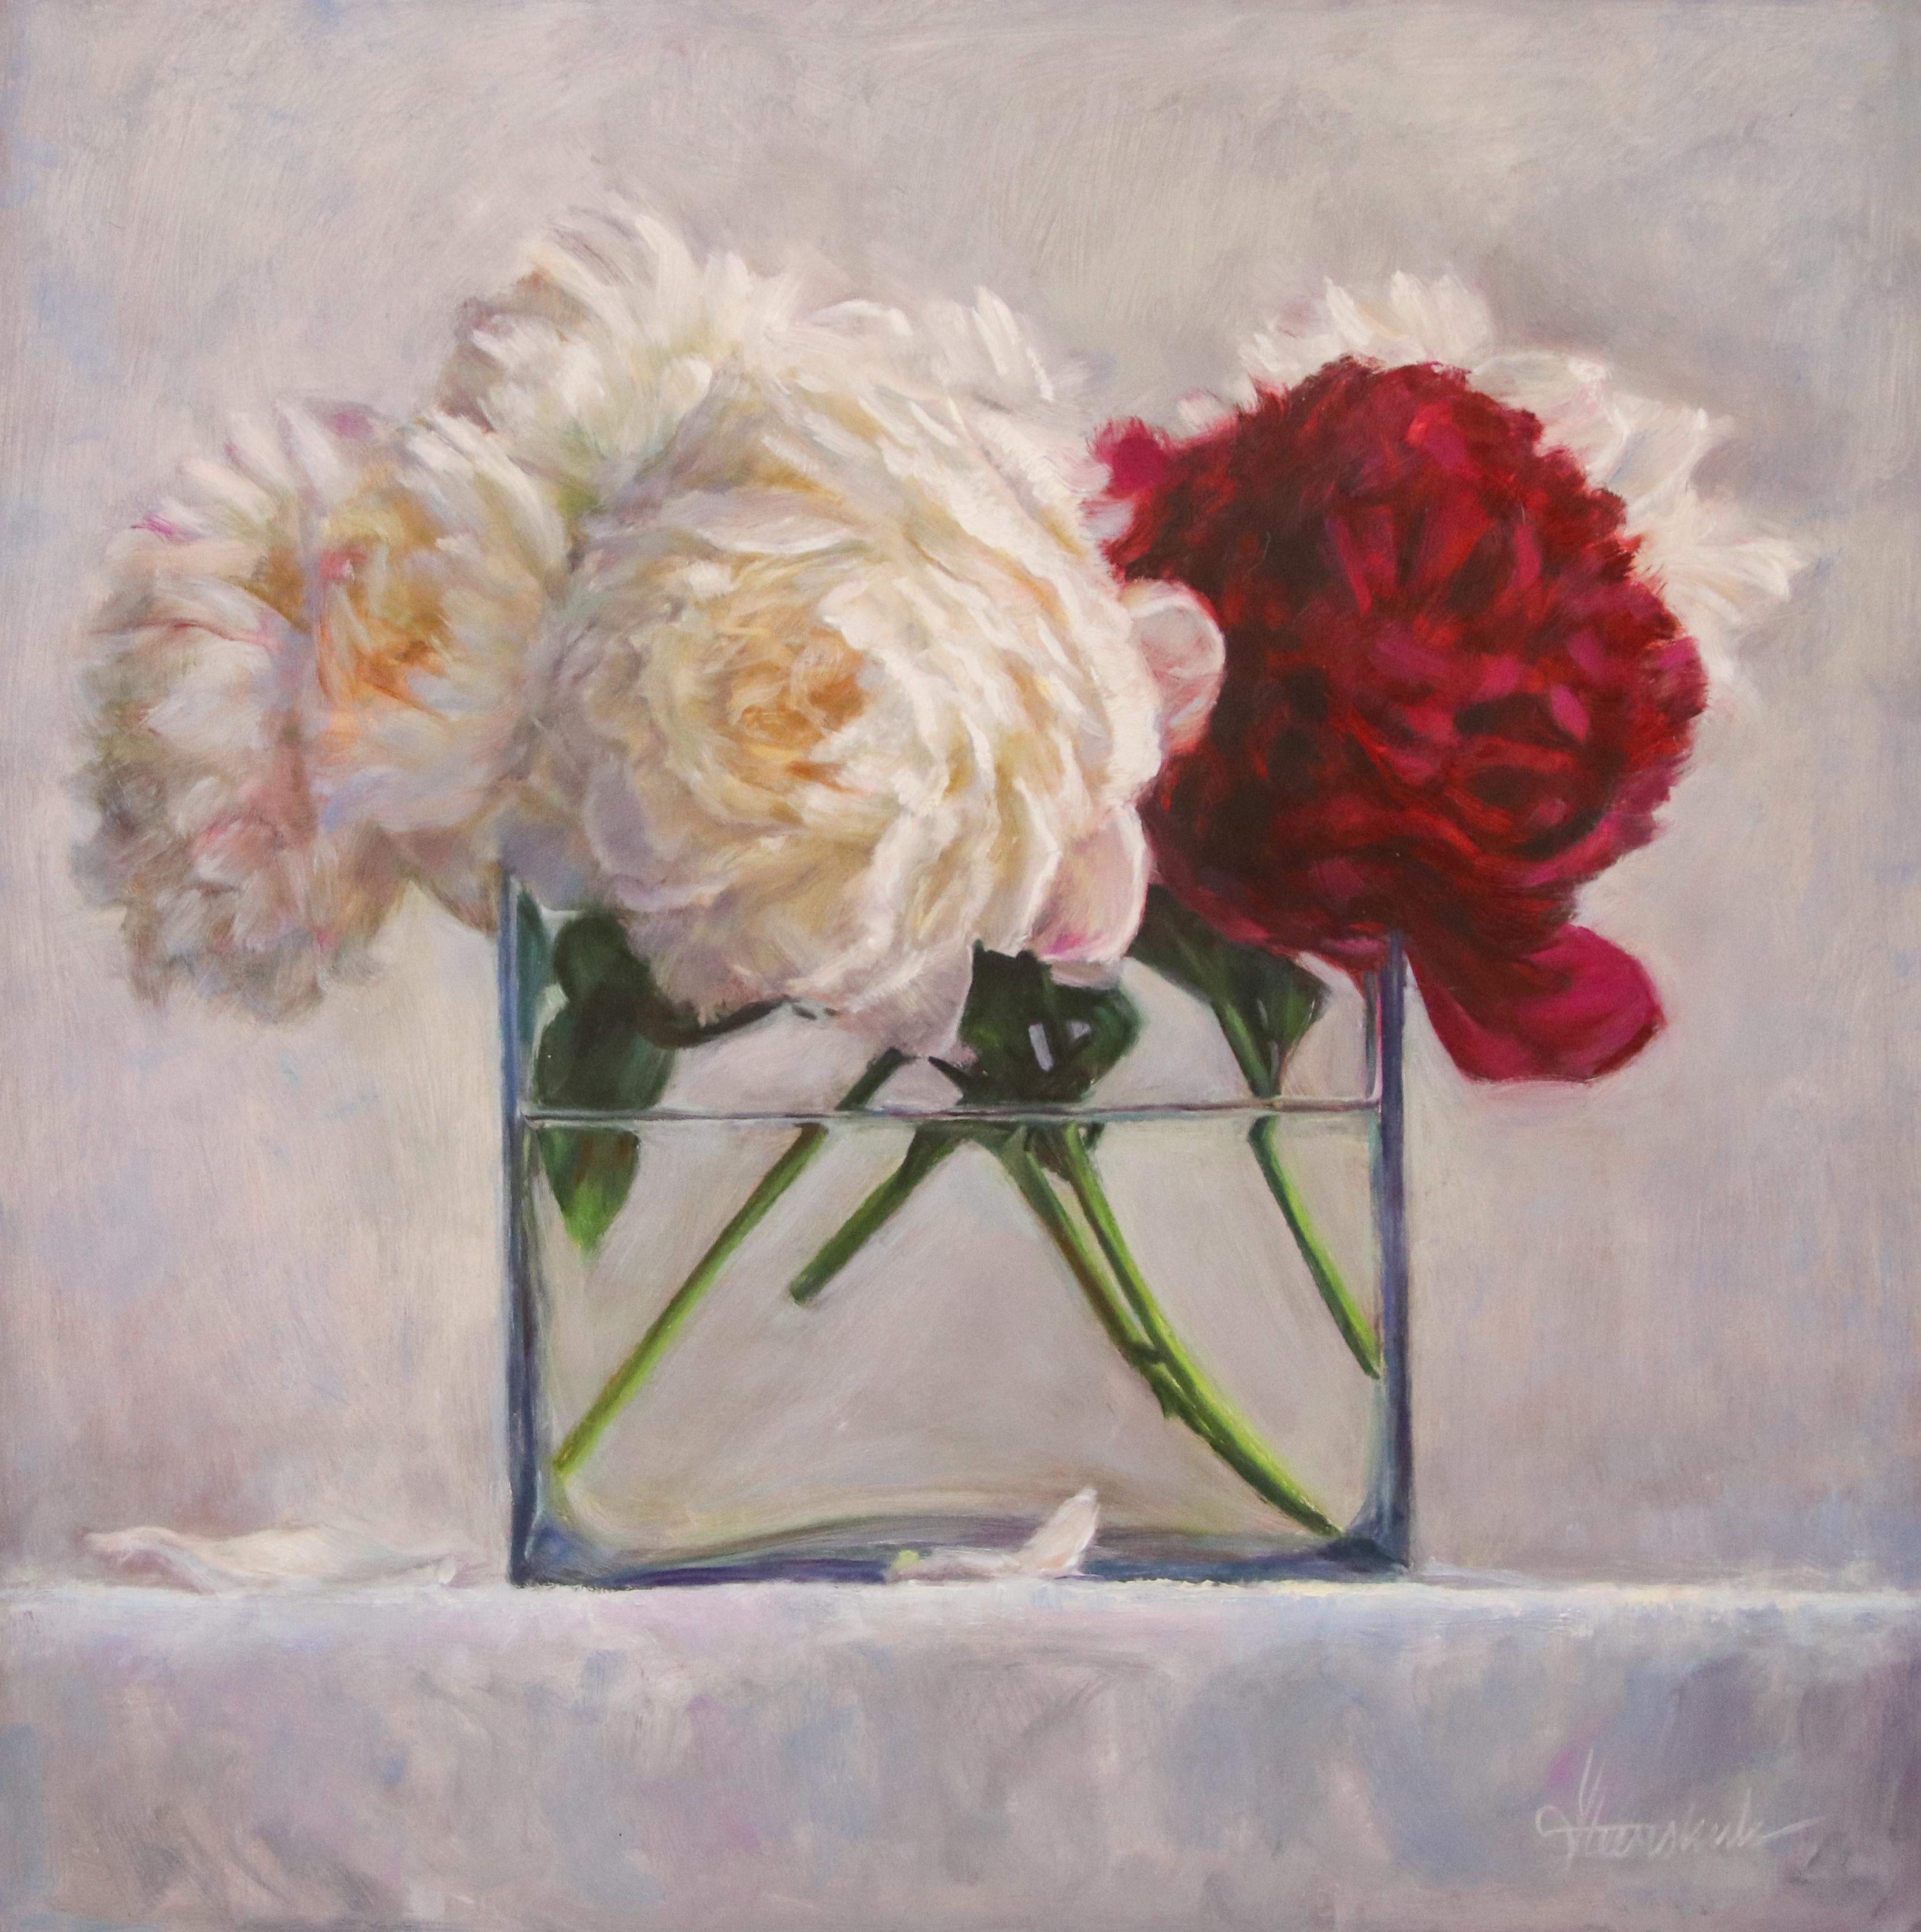 Yvonne Heemskerk Figurative Painting - Velvet - 21st Century Contemporary Still-Life of a Vase with Red & White Flowers